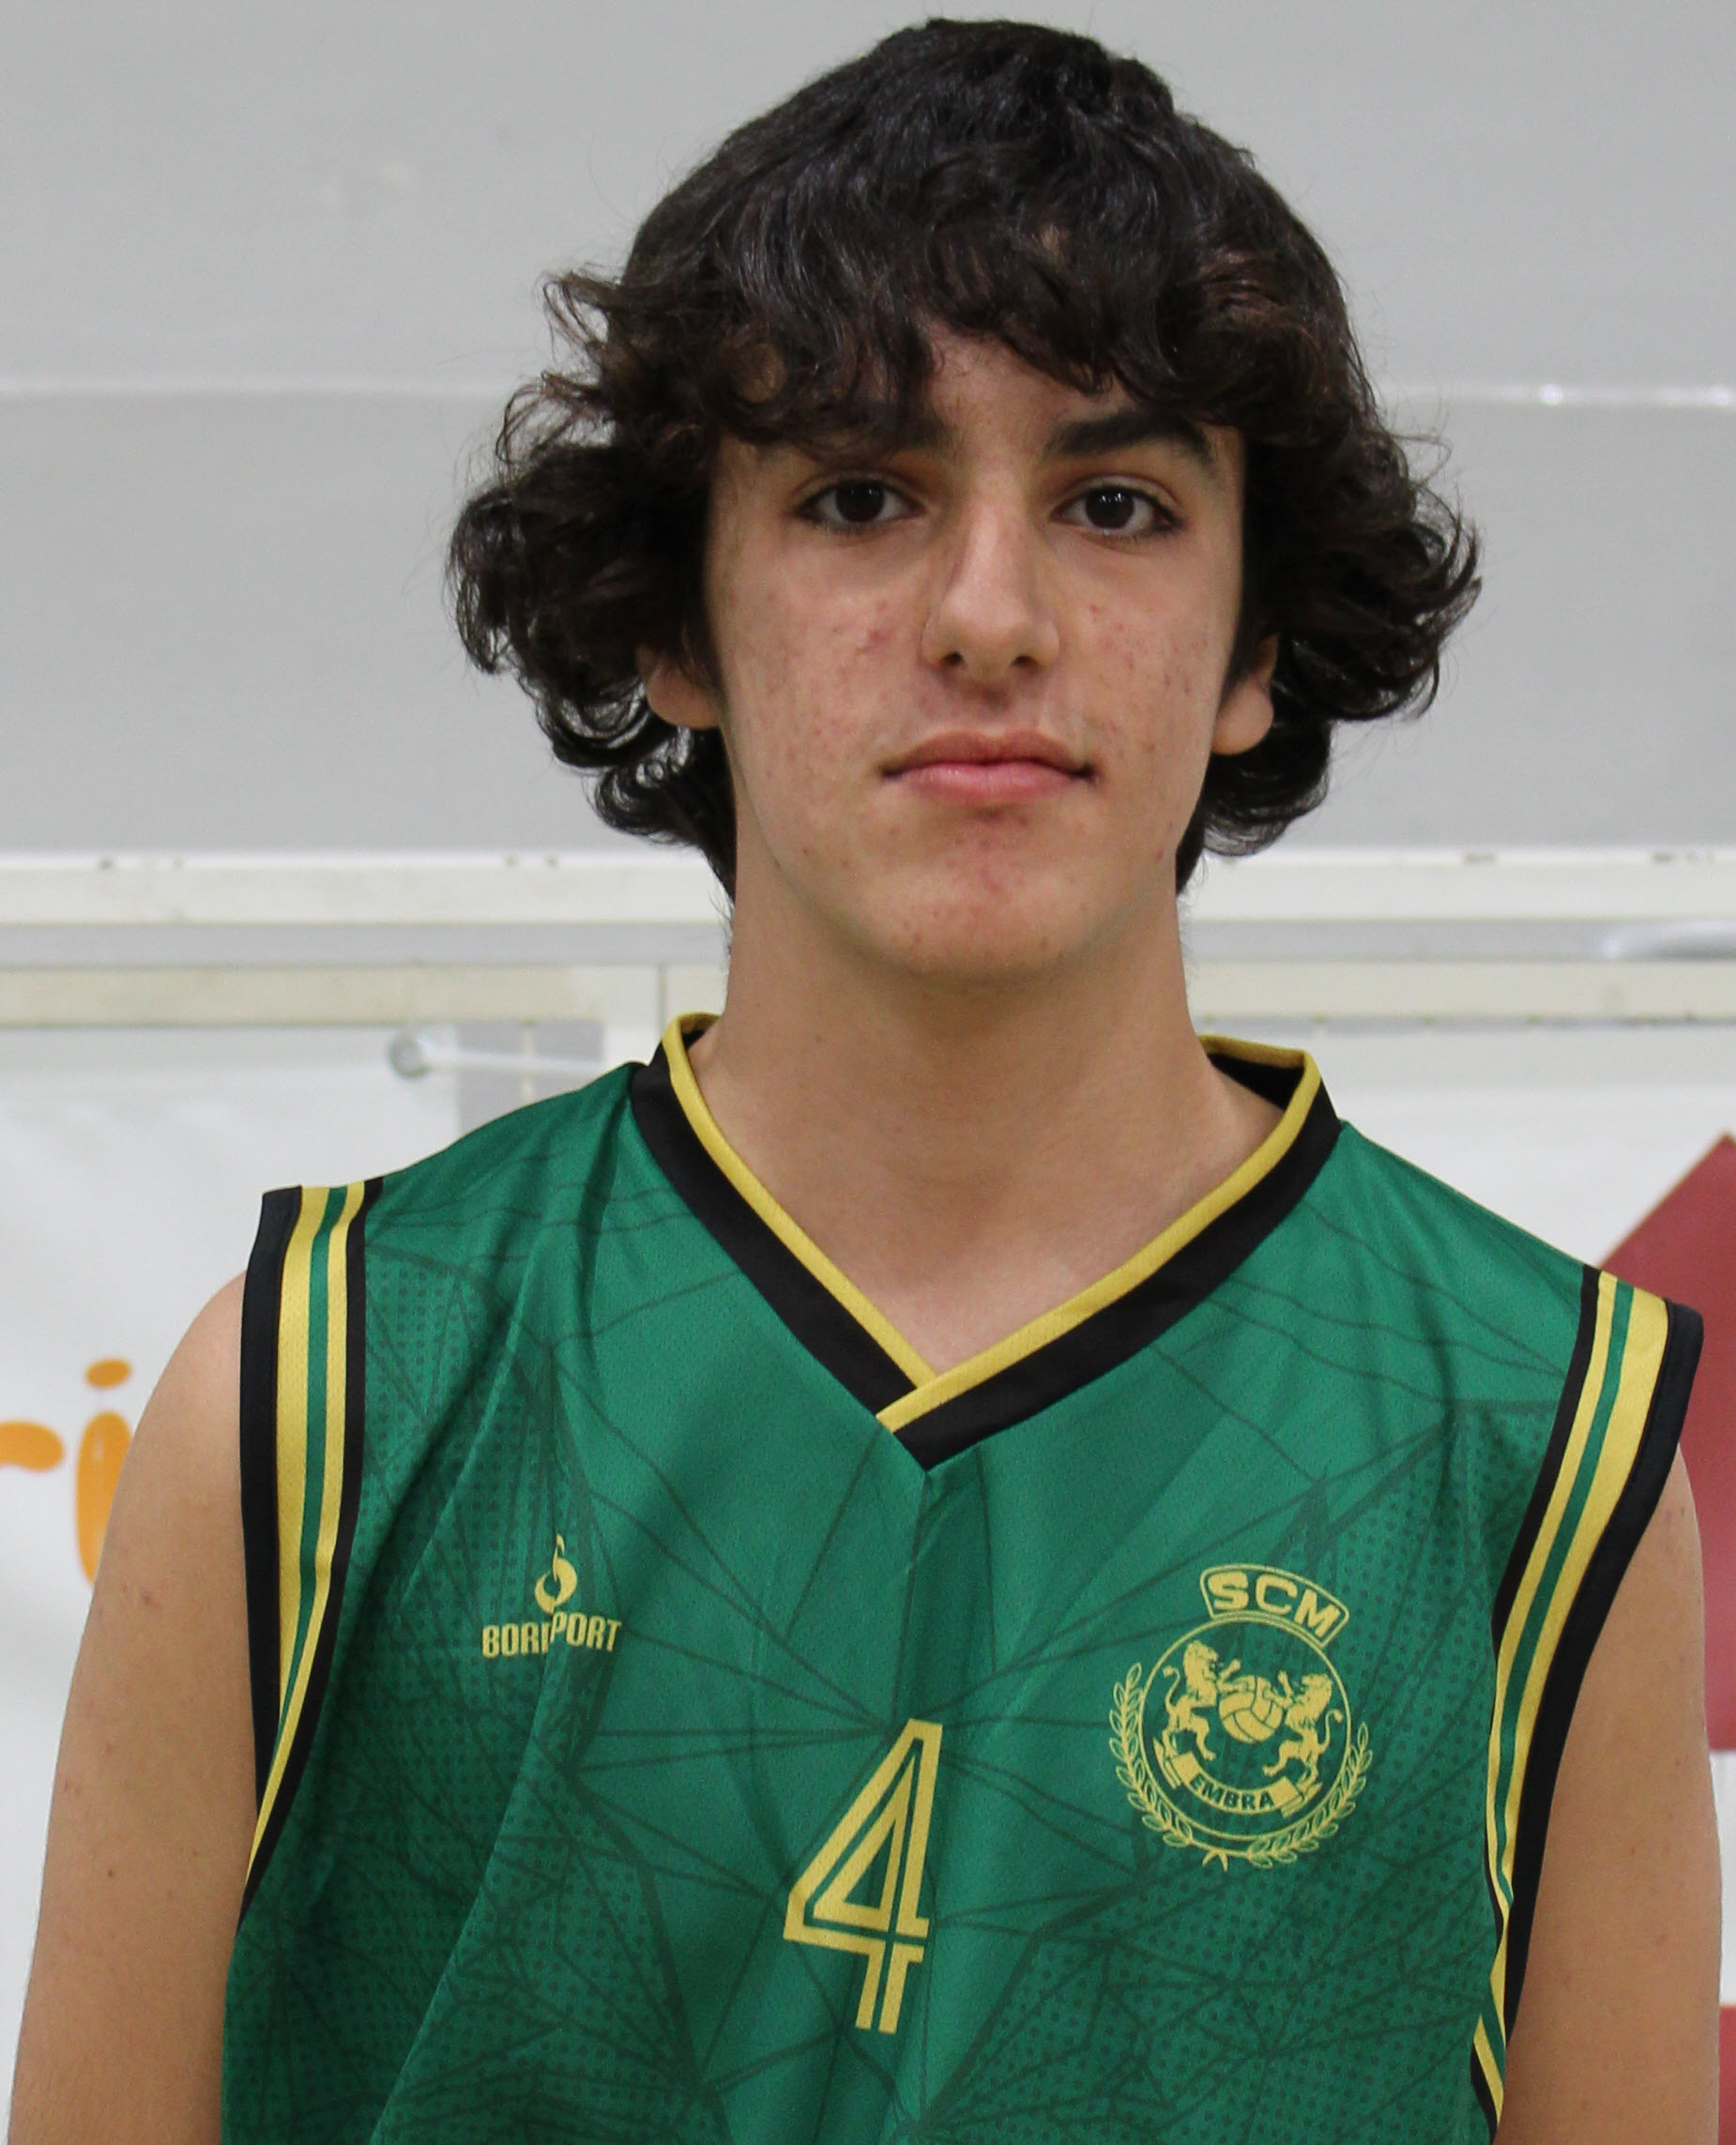 Miguel Sousa